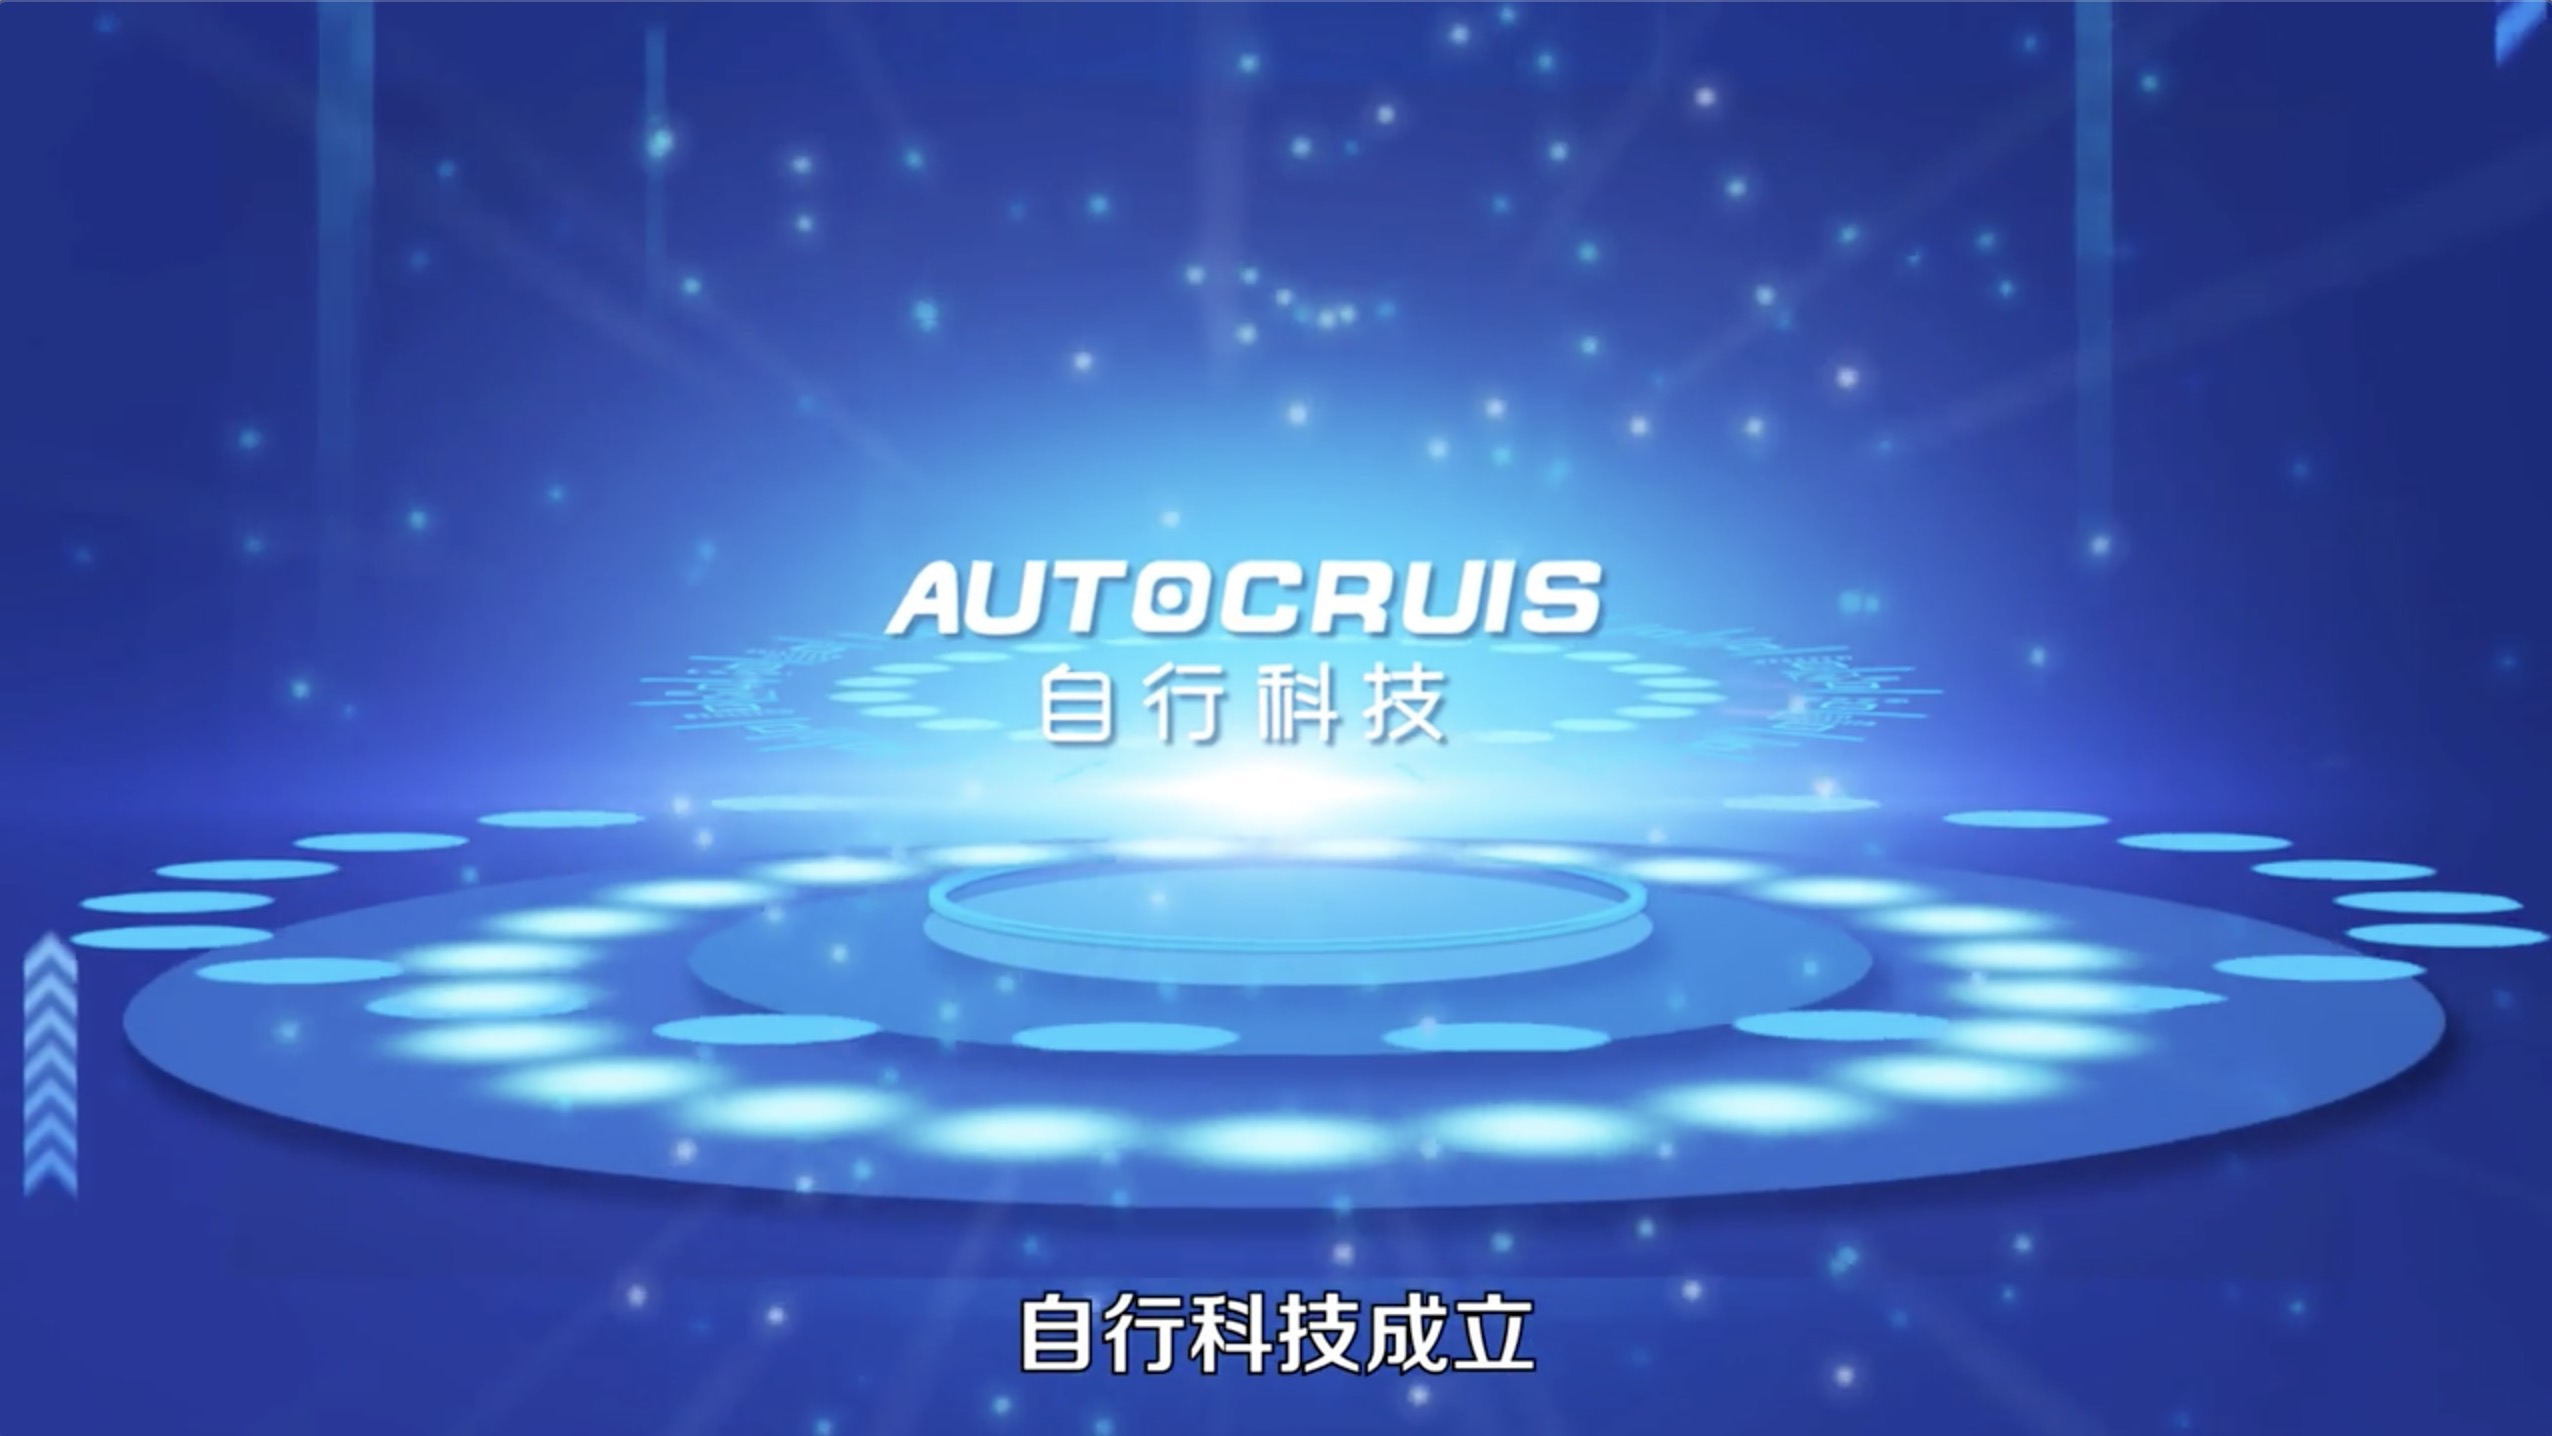 Autocruis Company Introduction